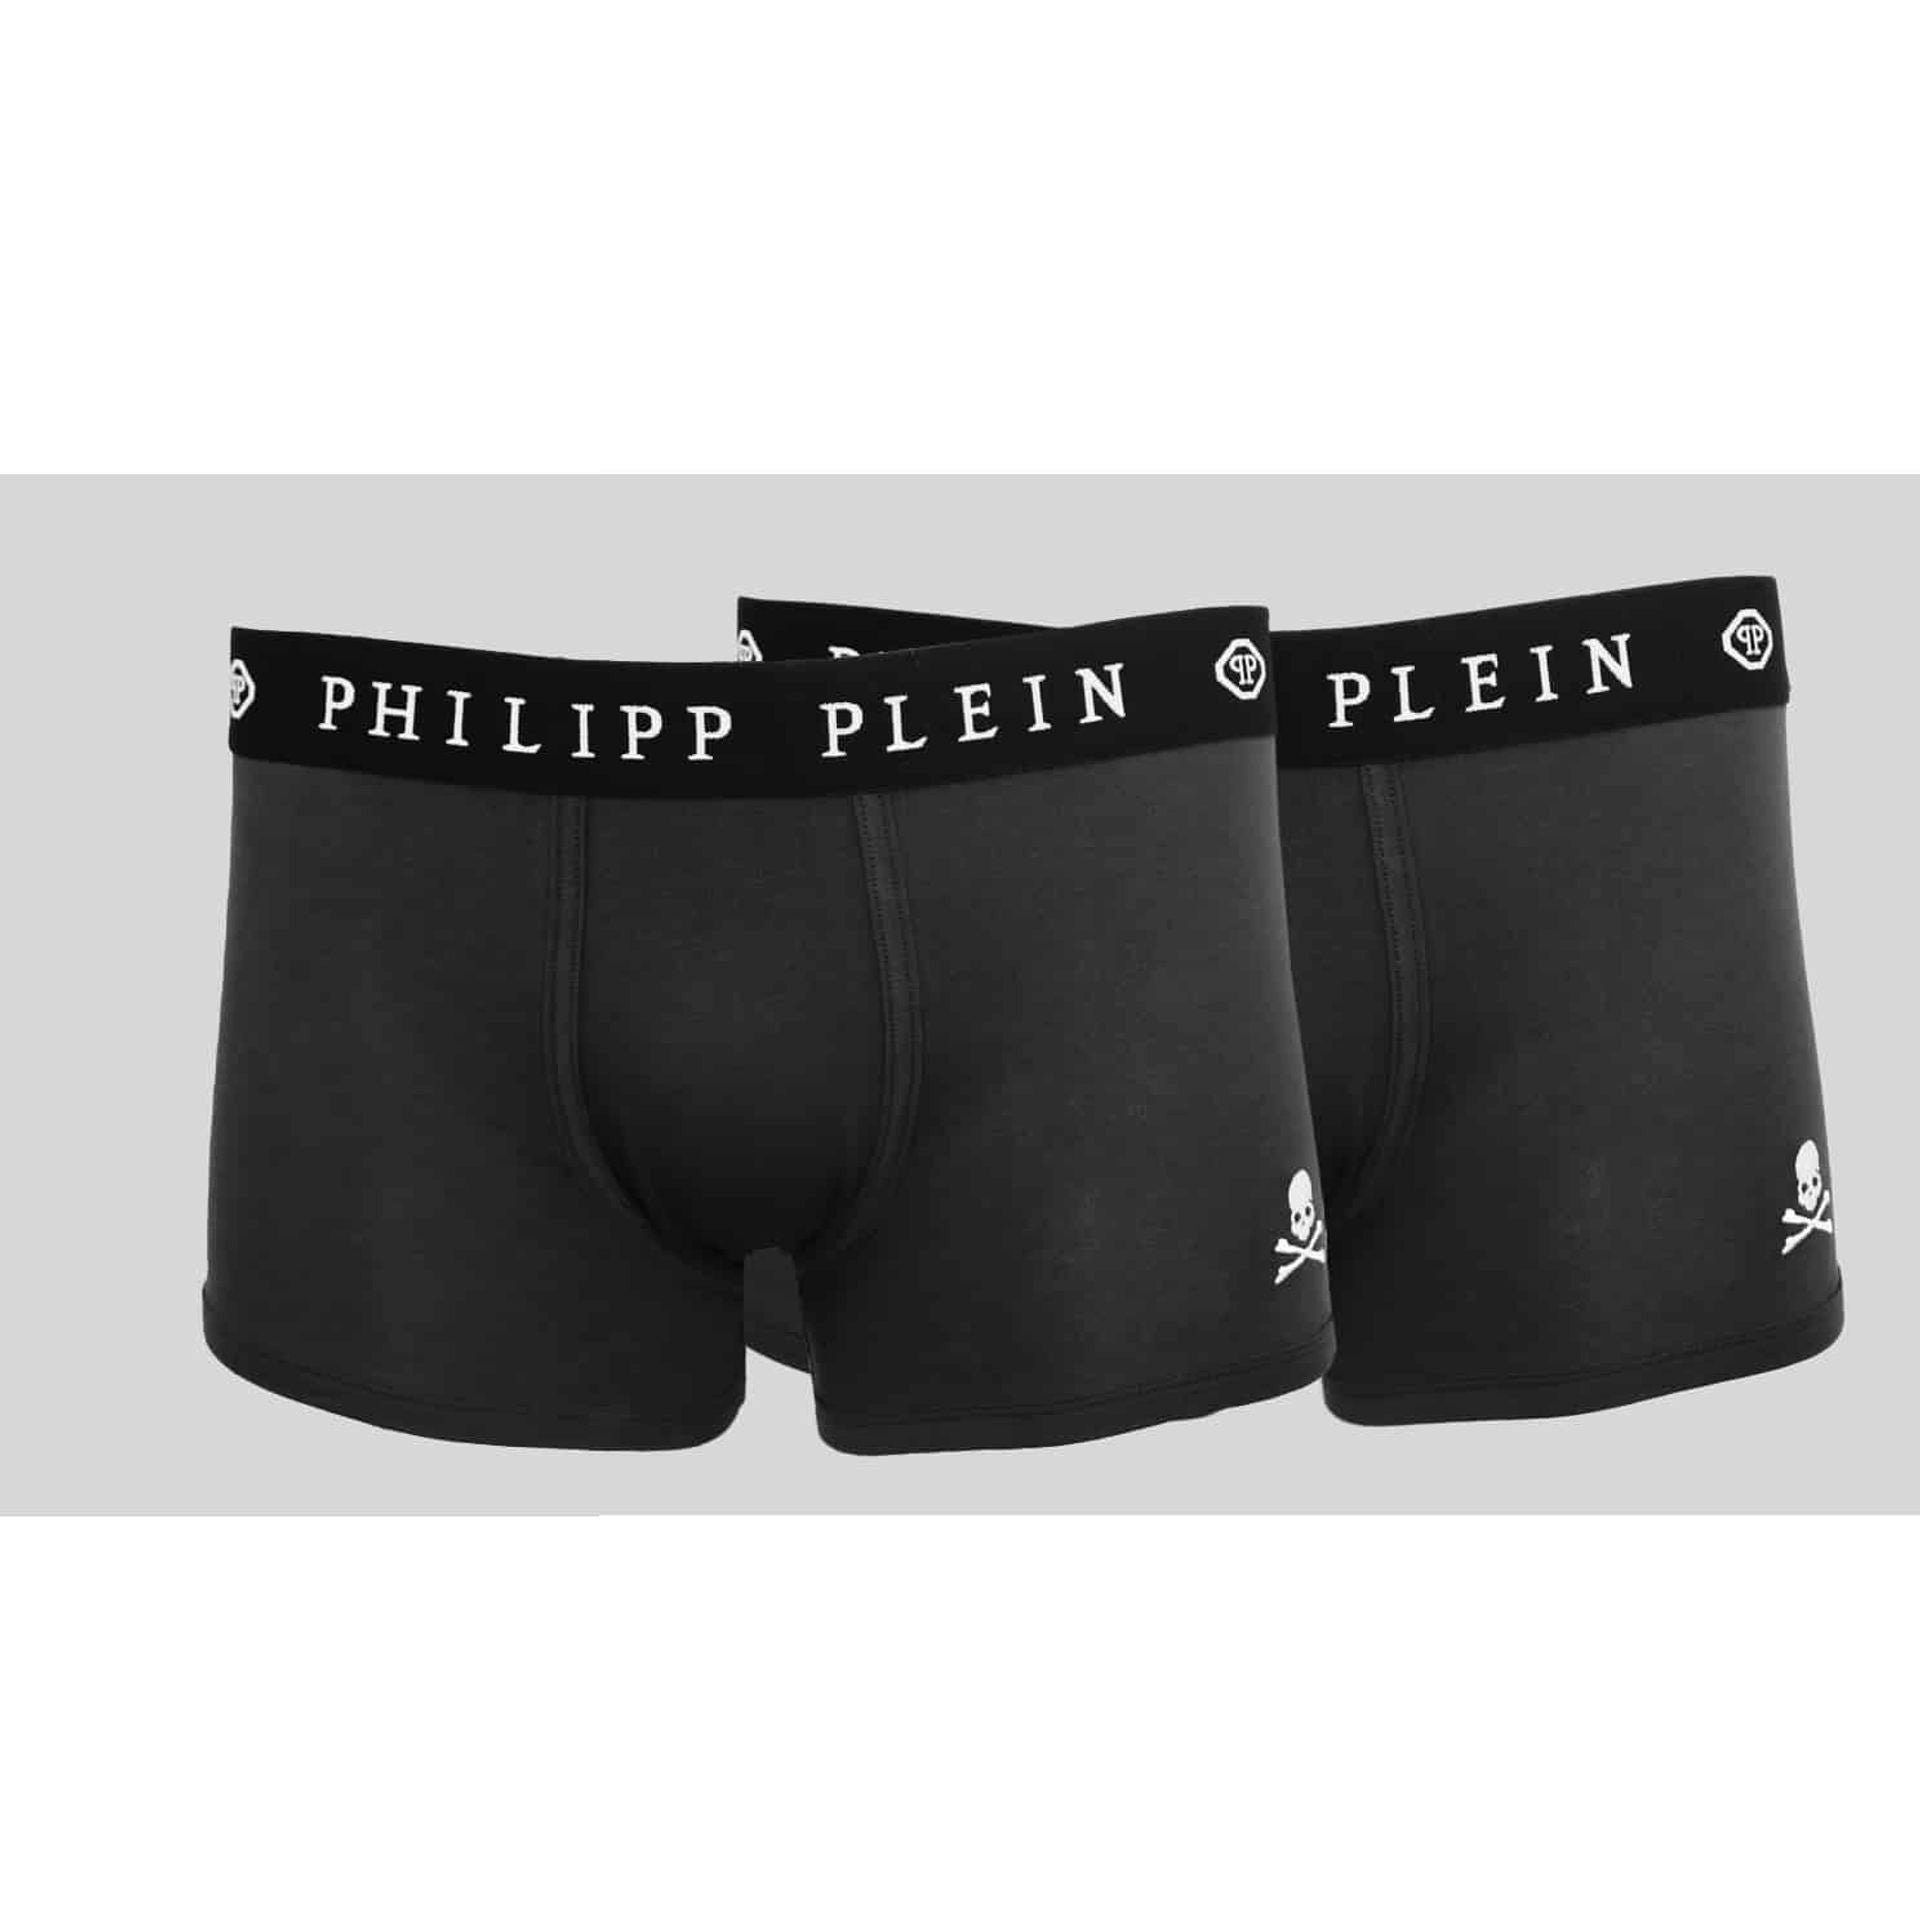 PHILIPP PLEIN Boxershorts, 2er-Pack, Schwarz 2er-Pack) (Packung